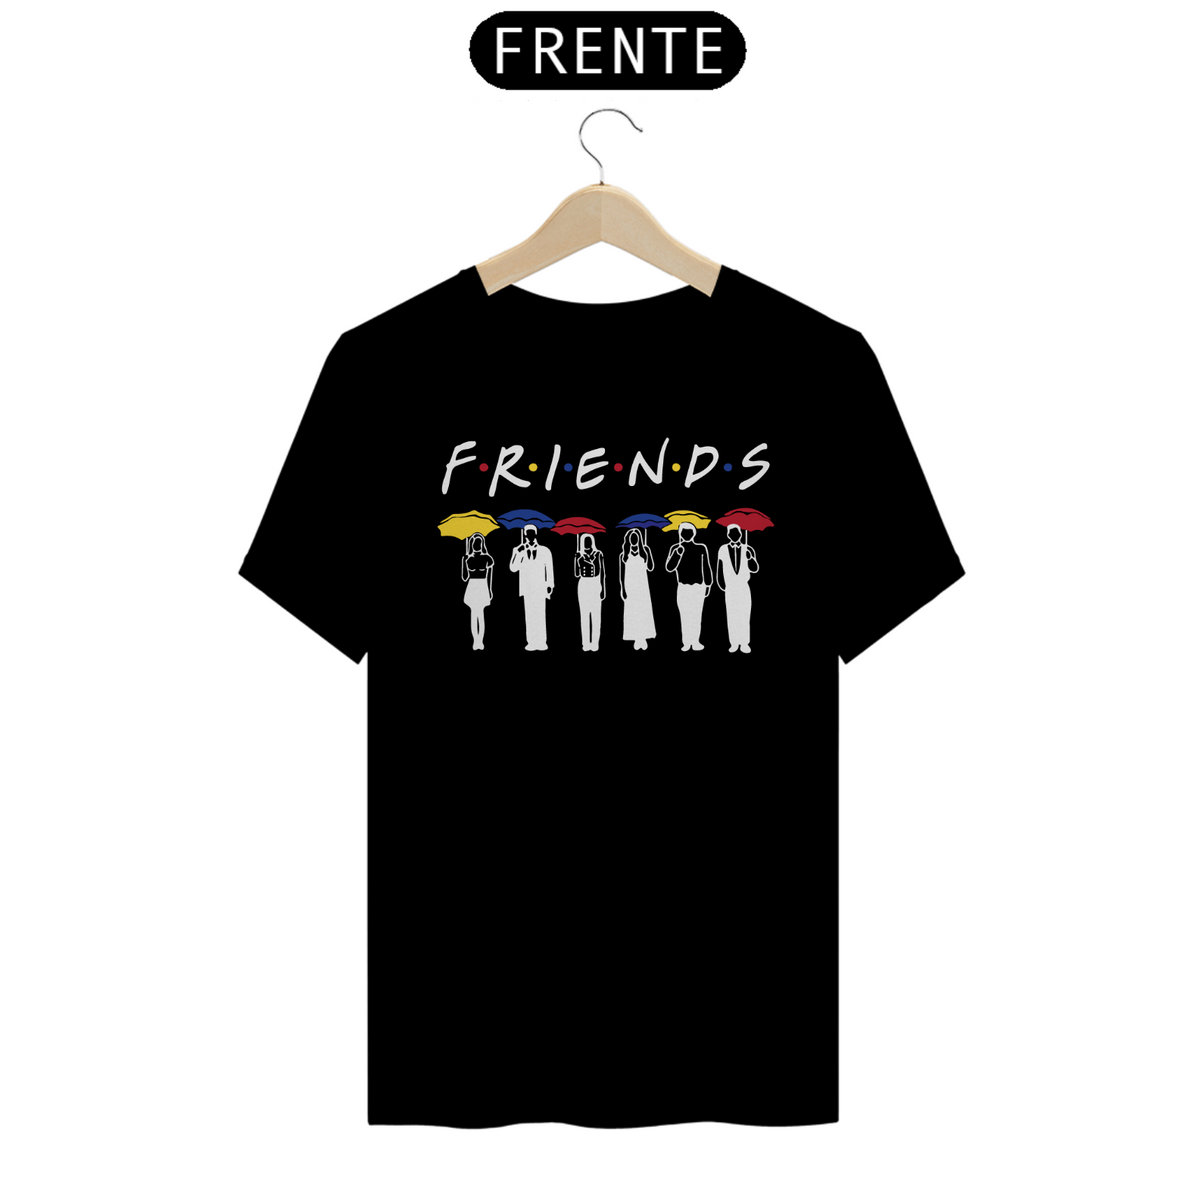 Nome do produto: Friends Abertura (cores escuras)